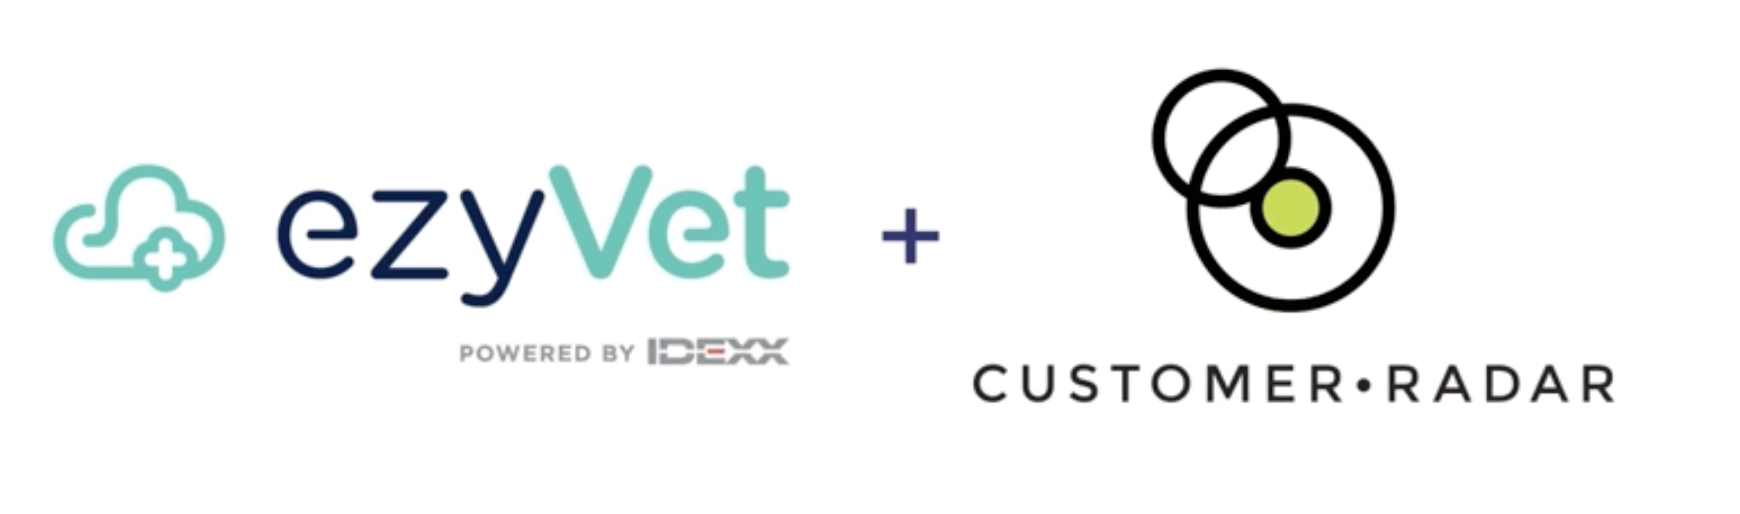 ezyvet and customer radar logo